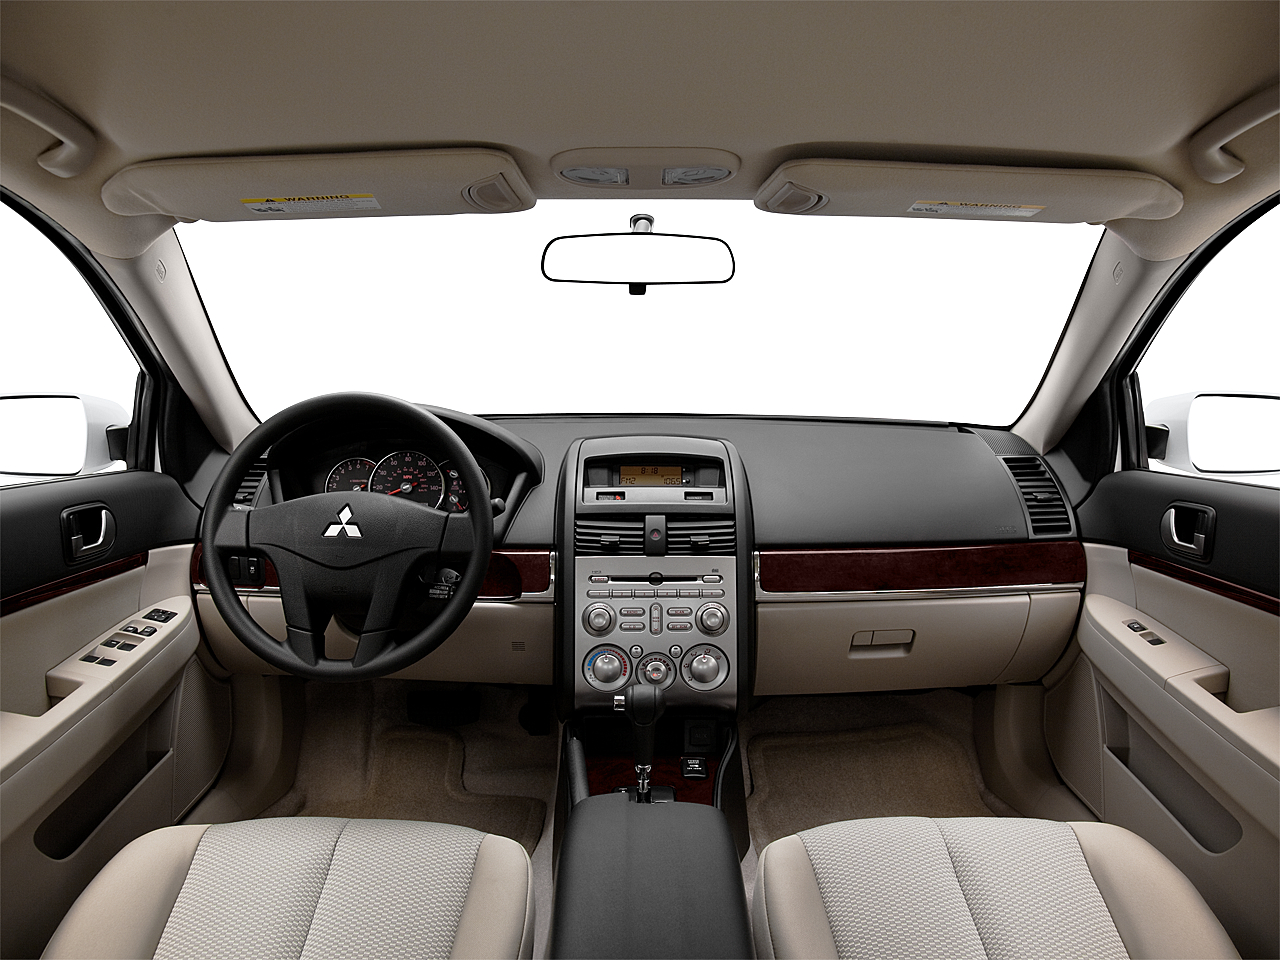 Mitsubishi Galant interior - Cockpit